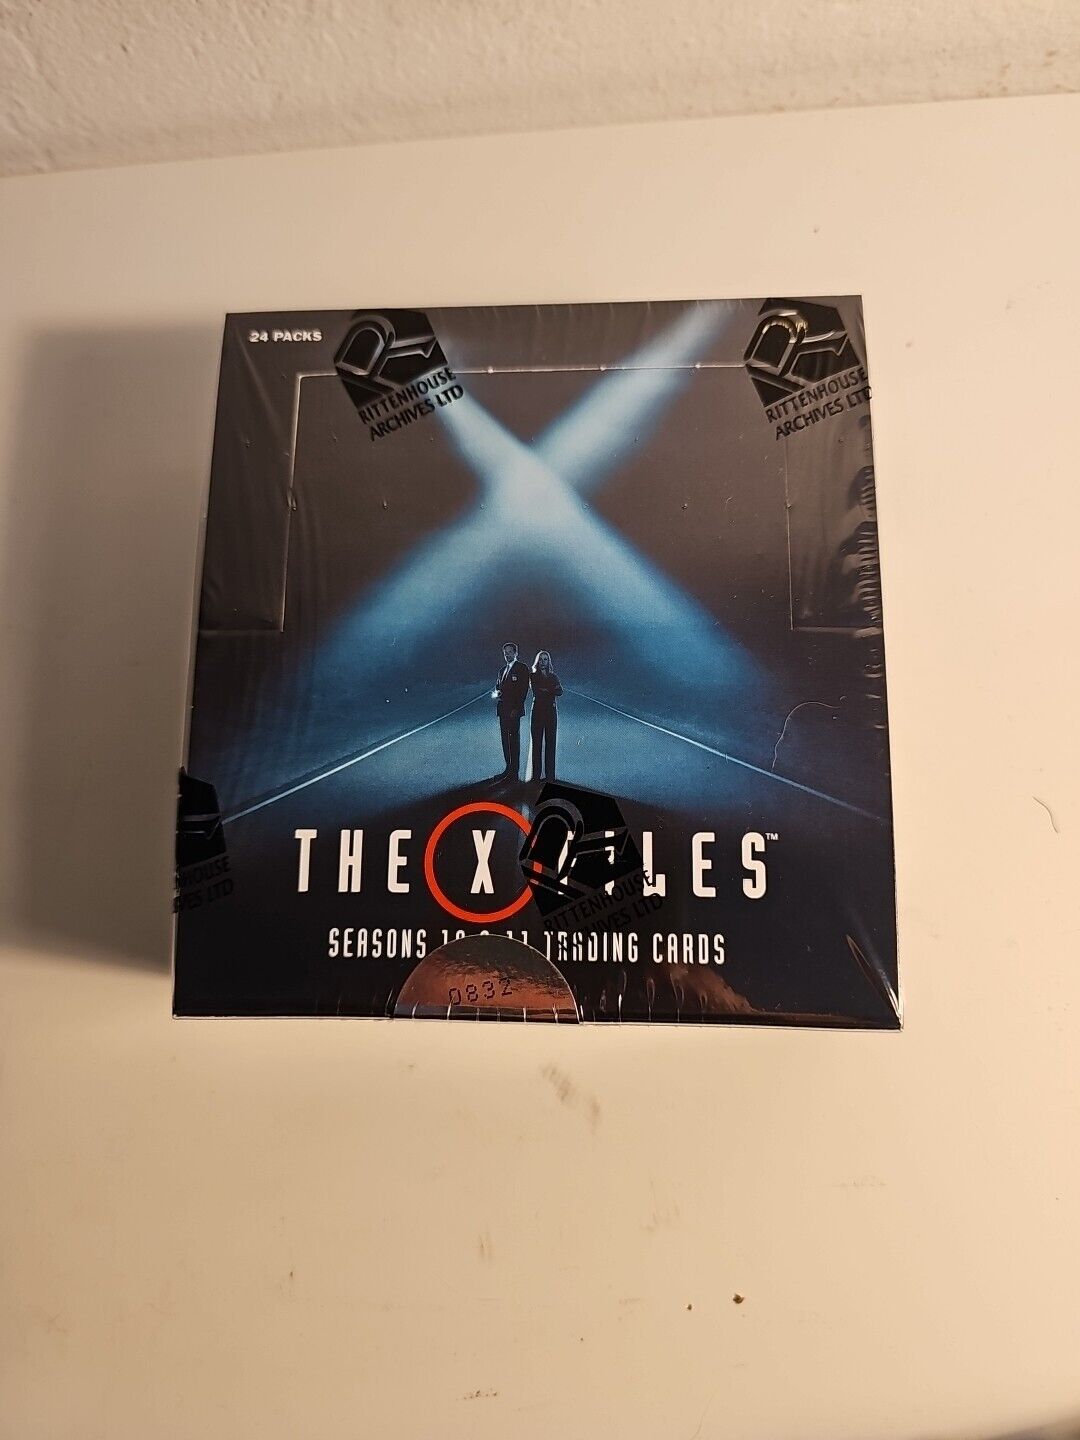 X-Files Seasons 10 & 11 Factory Sealed Trading Cards Box Rittenhouse 2018